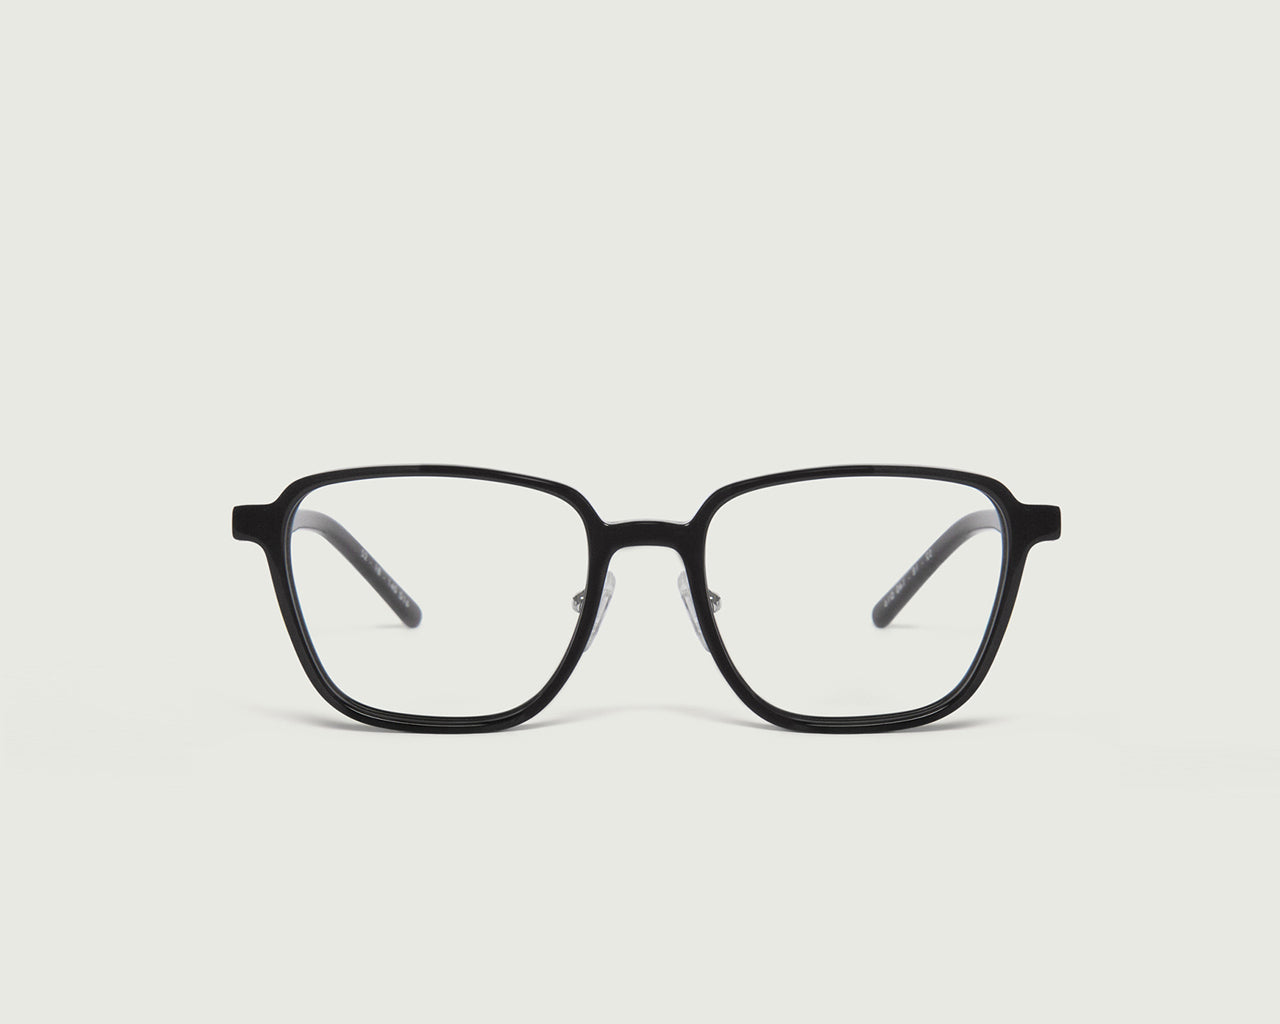 Charcoal:::Jensen Eyeglasses square black plastic front